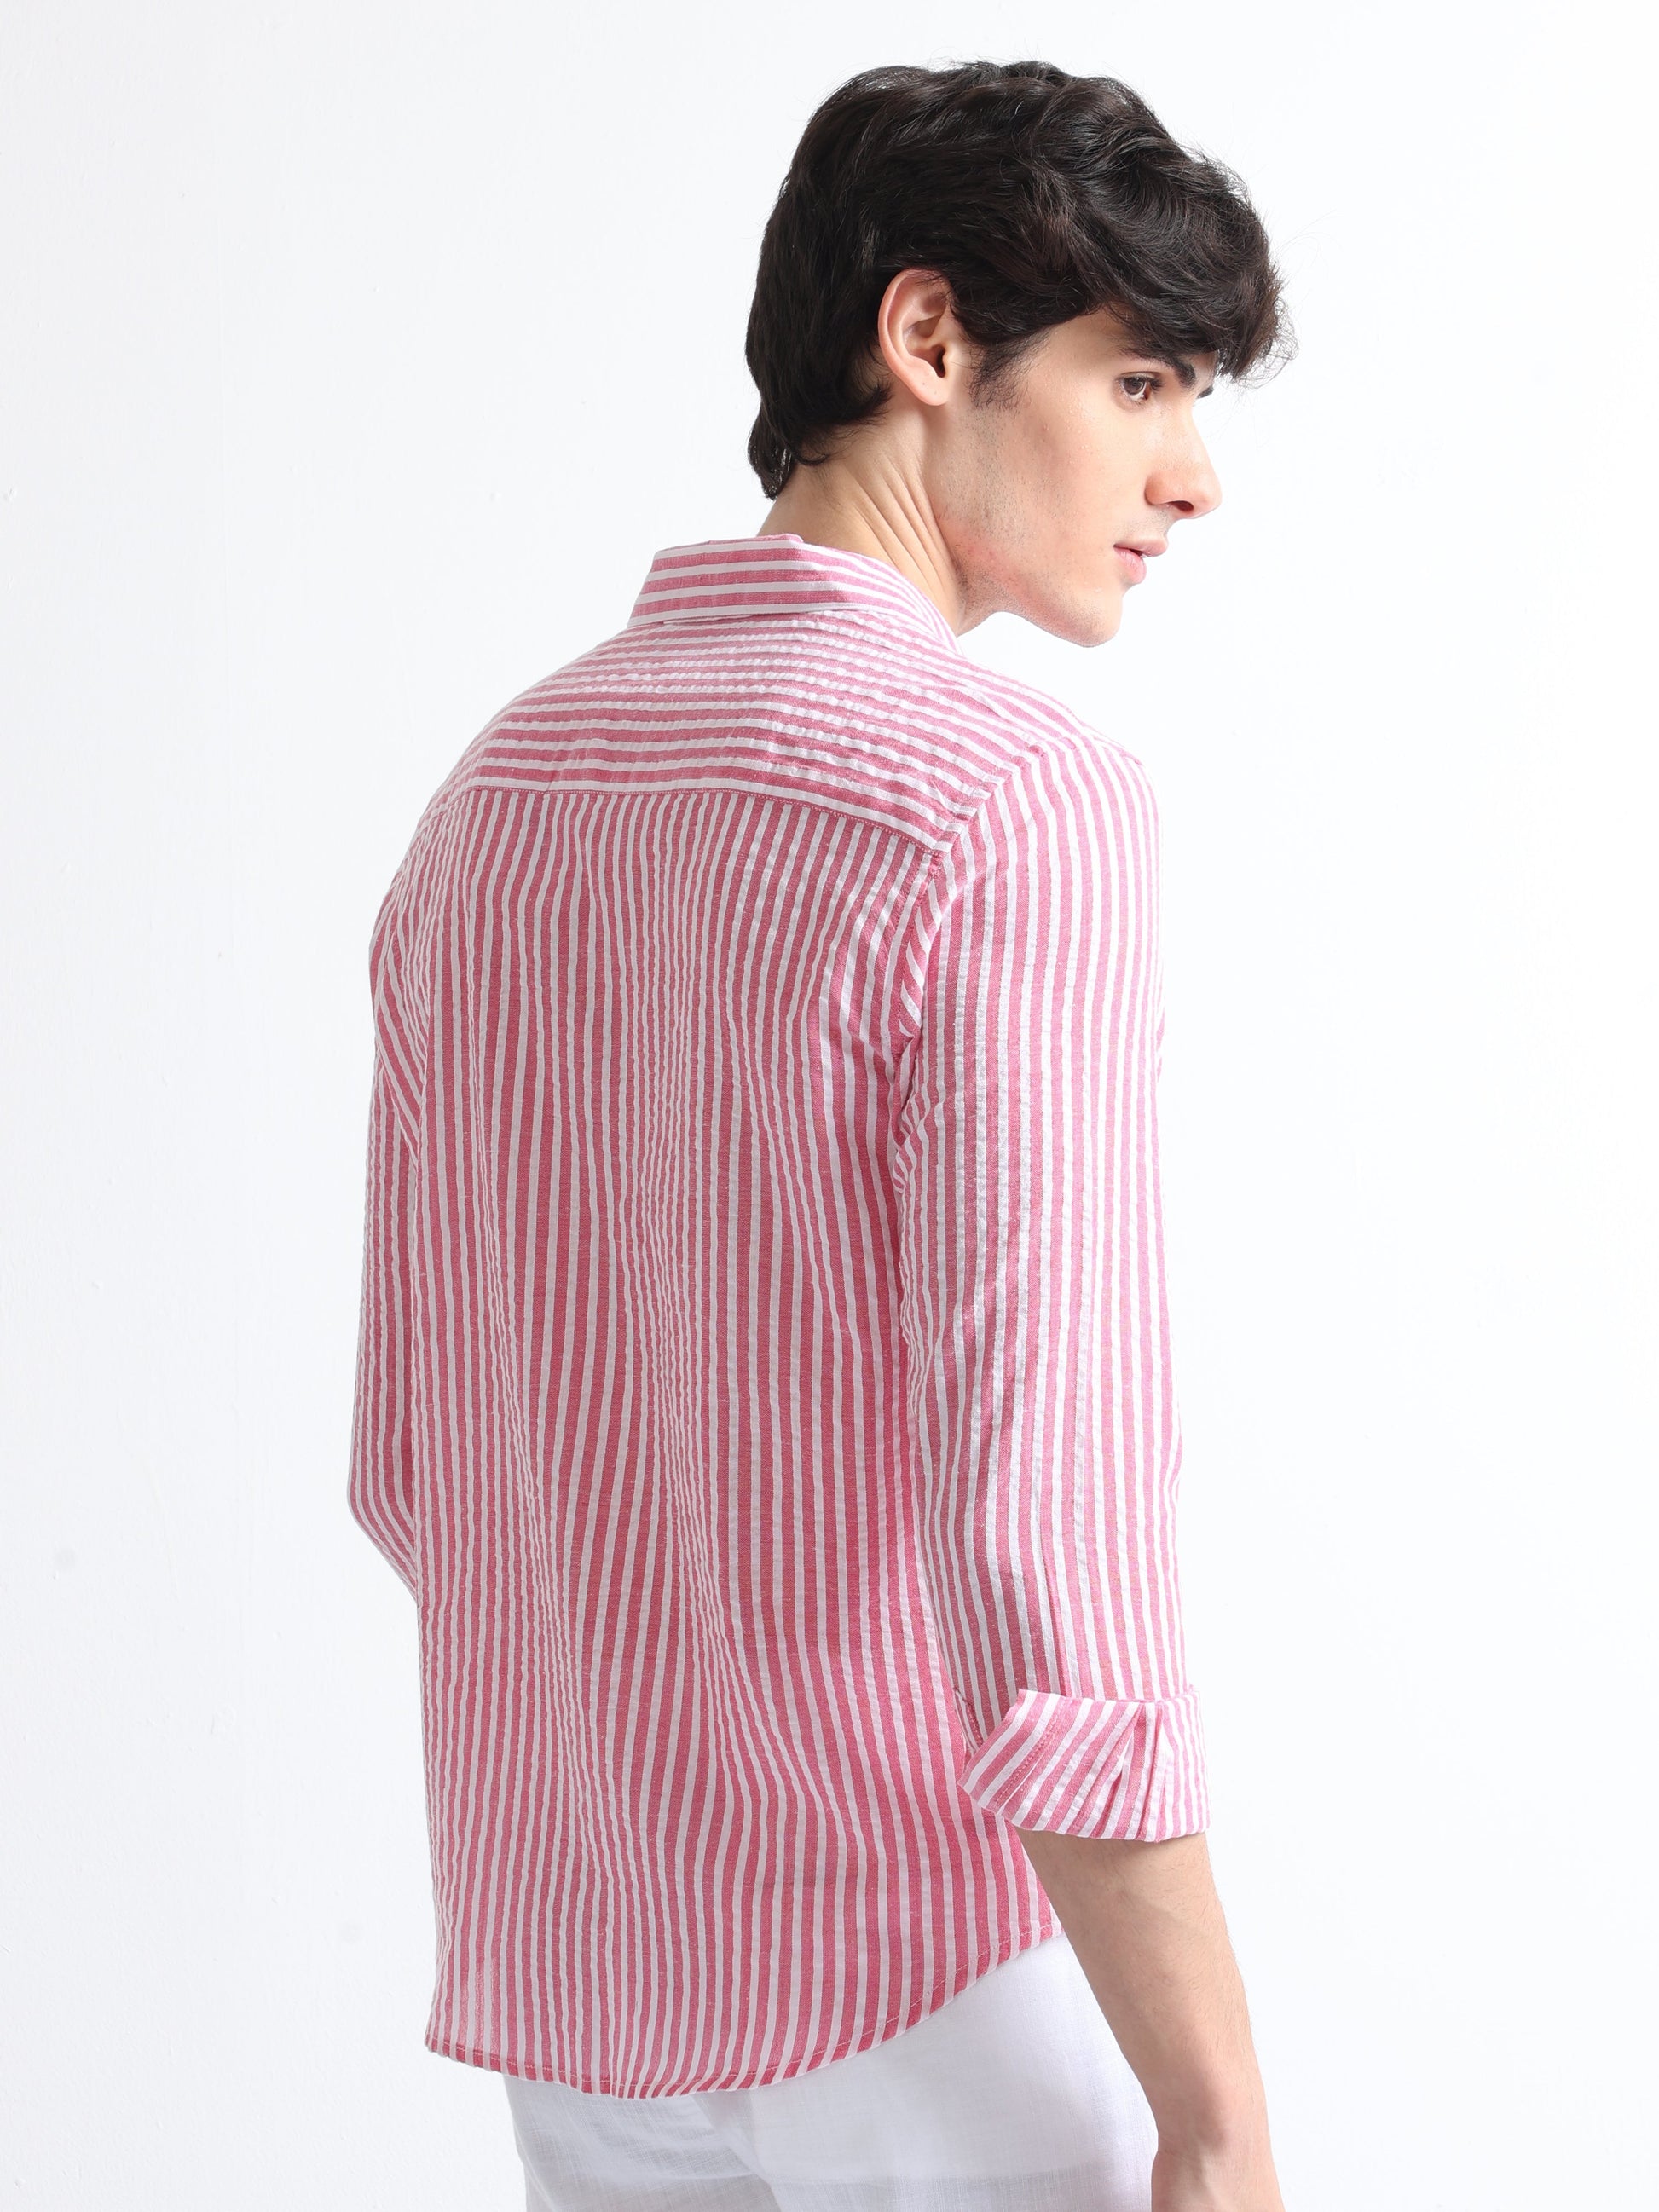 Buy Open Collar Stylish Pocket Stripe Shirt Online.